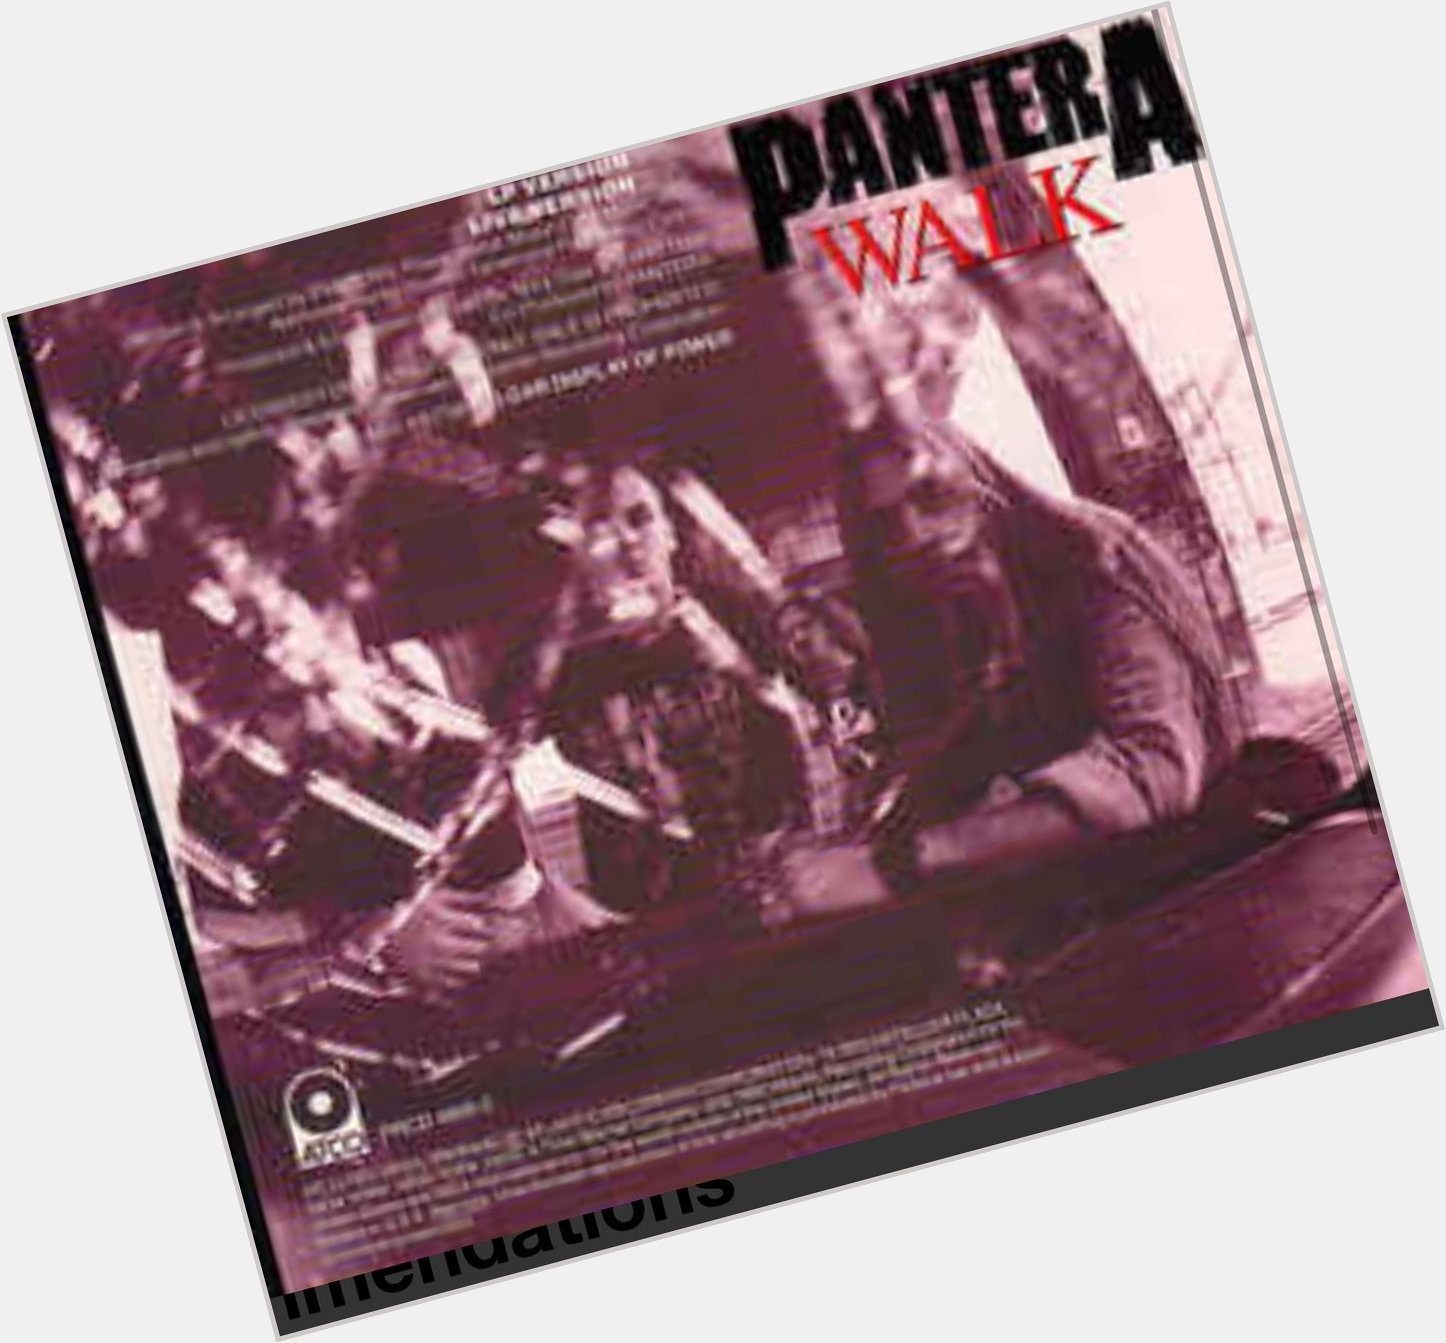 Pantera Walk from Vulgar Display Of Power. Happy Birthday to Phil Anselmo 